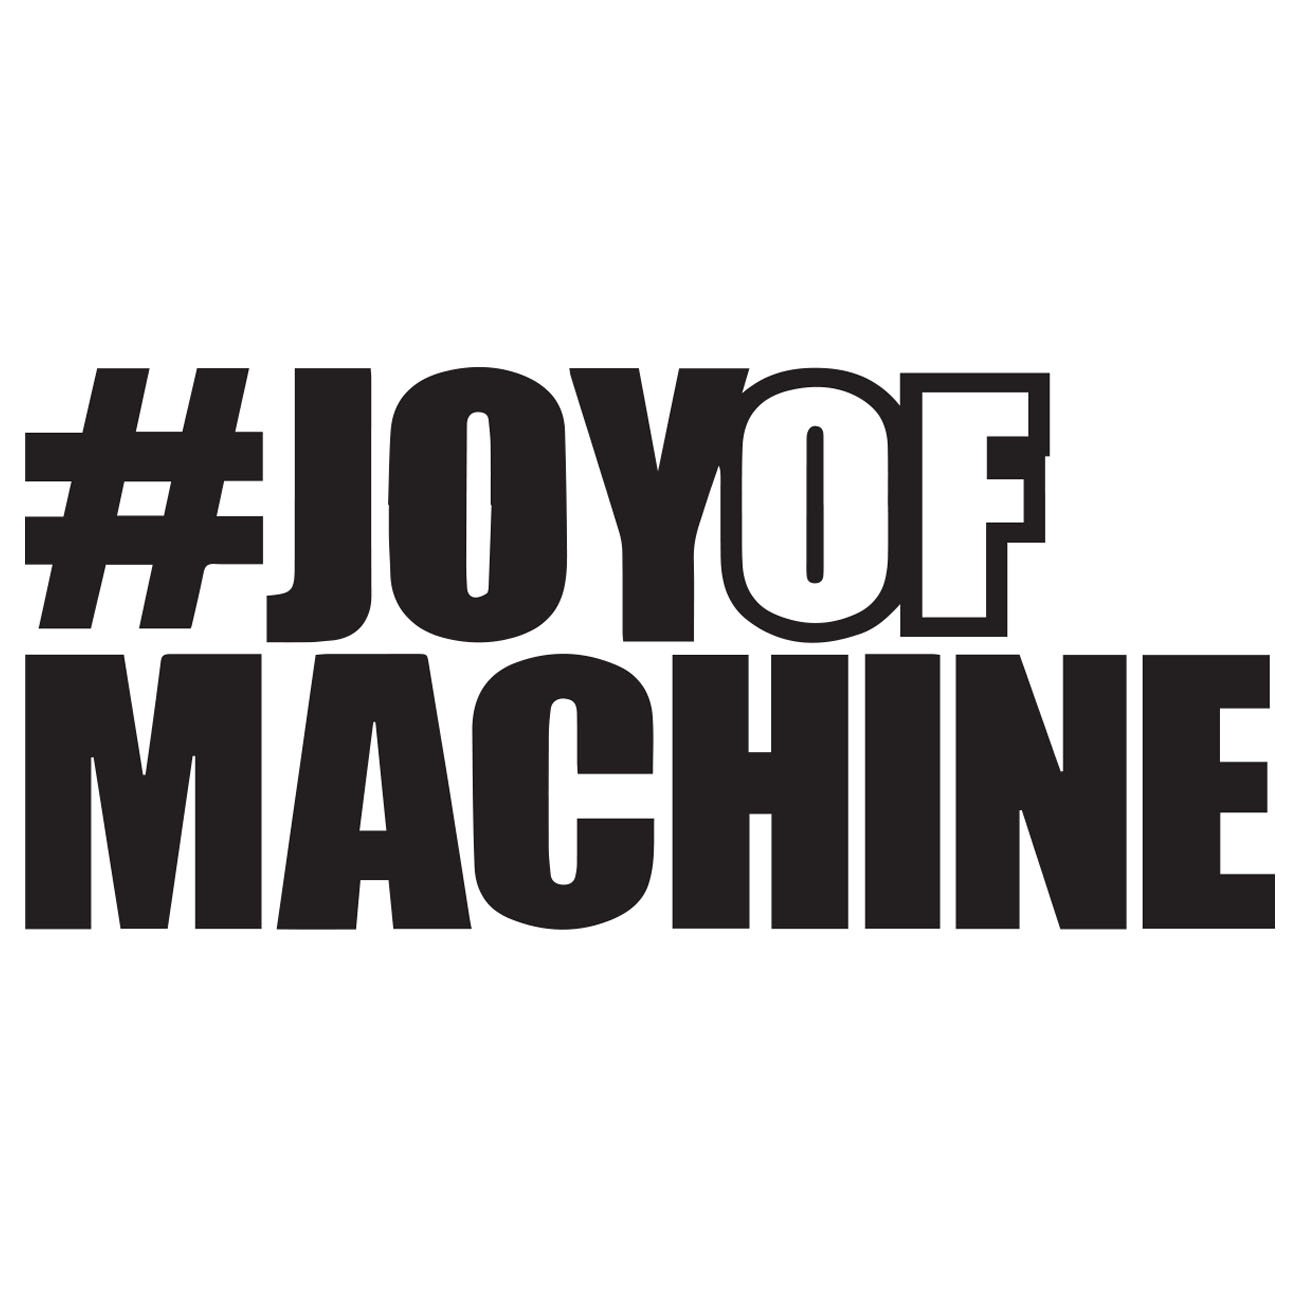 Joy of machine